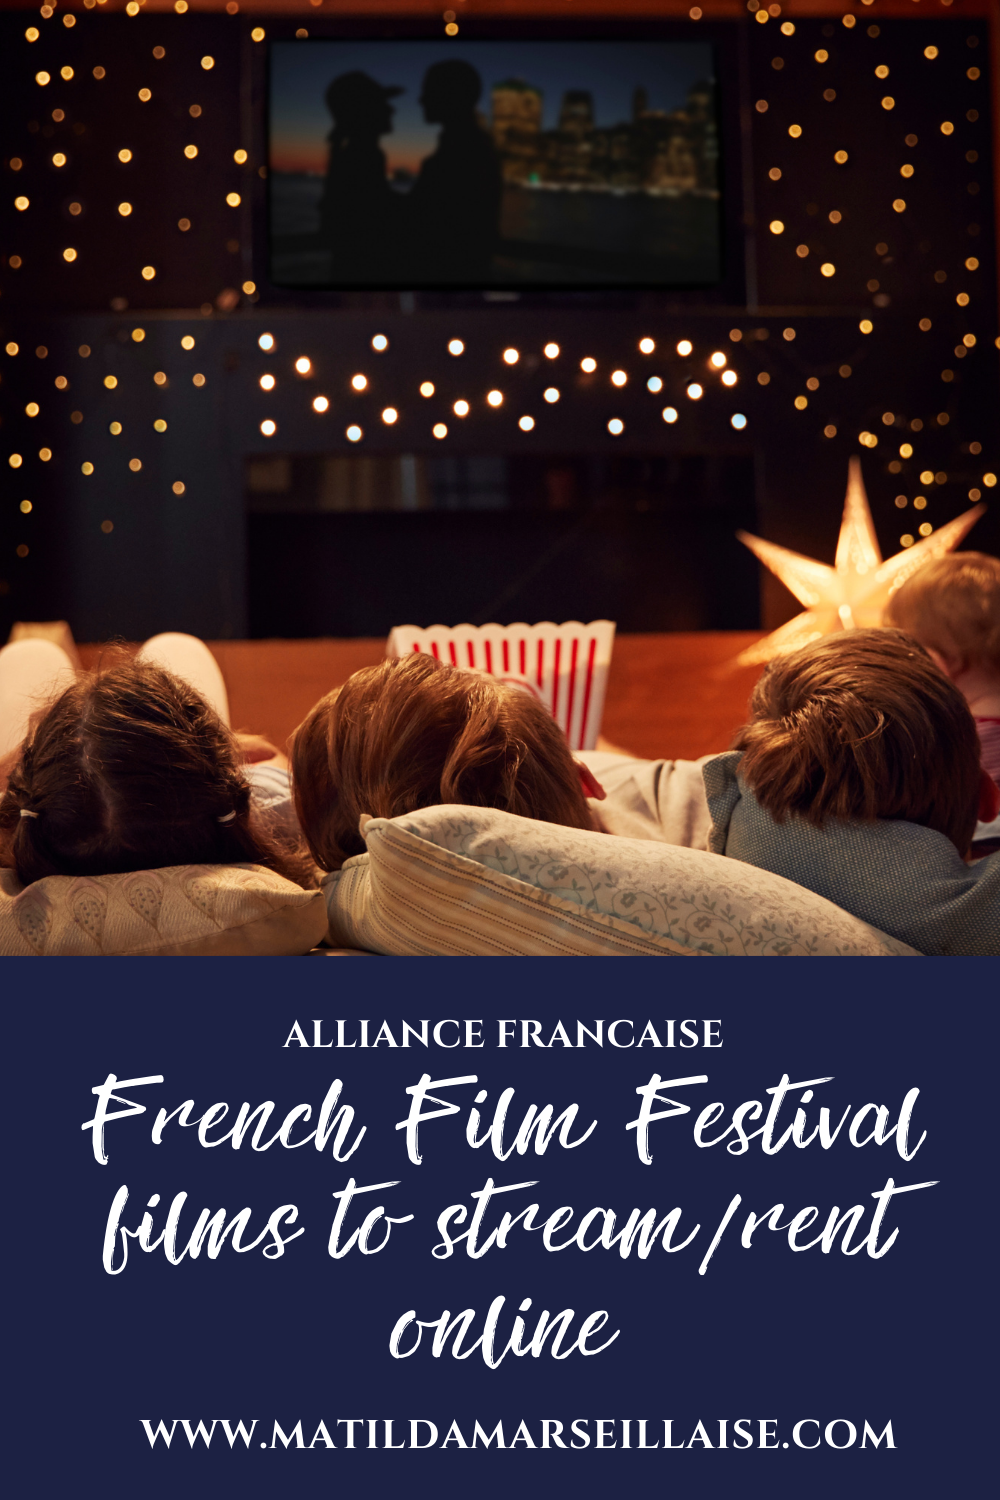 Alliance Française 2020 French Film Festival films to stream/rent online -  Matilda Marseillaise